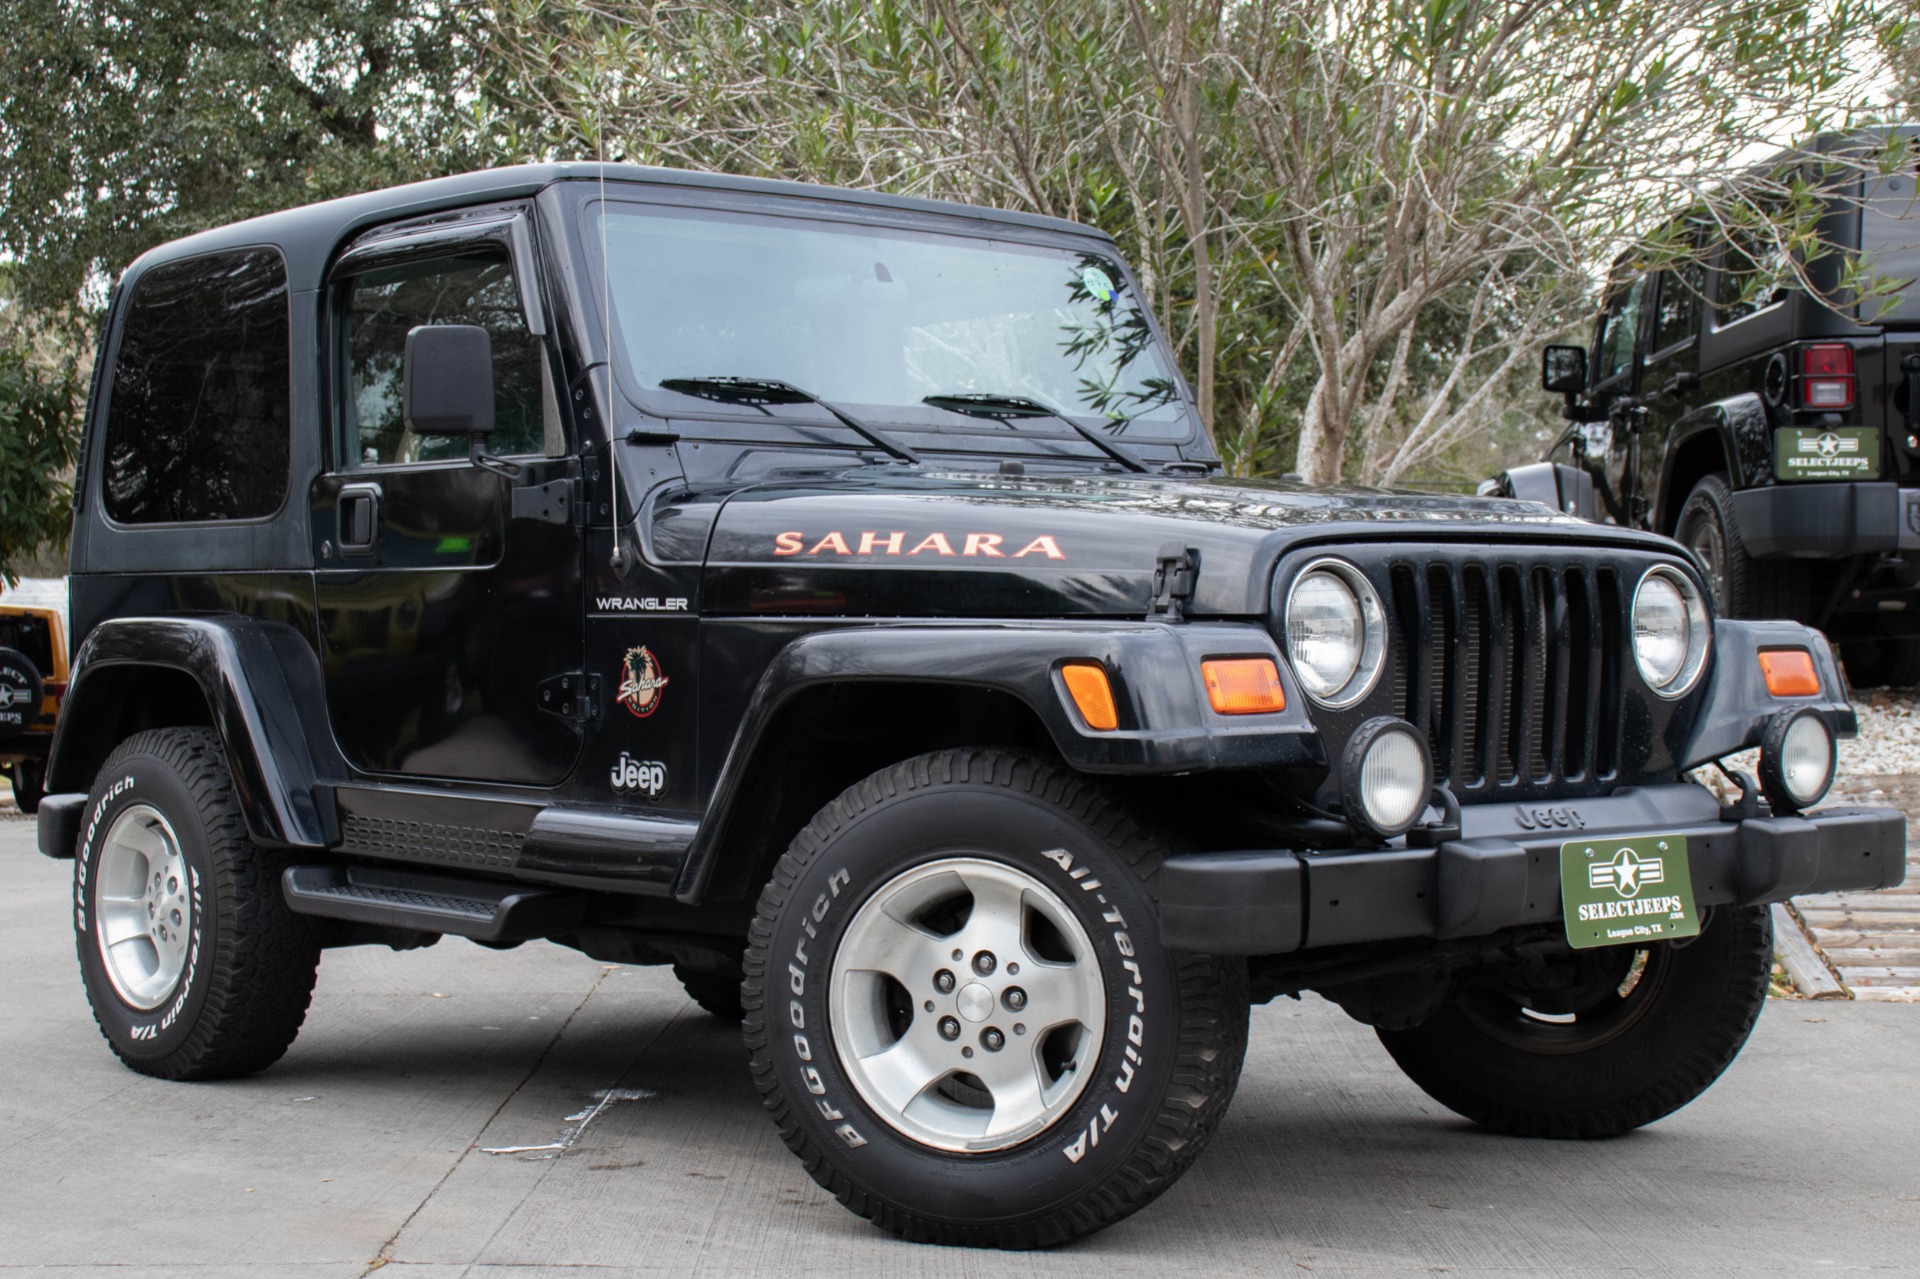 Used 2002 Jeep Wrangler Sahara For Sale 10 995 Select Jeeps Inc 